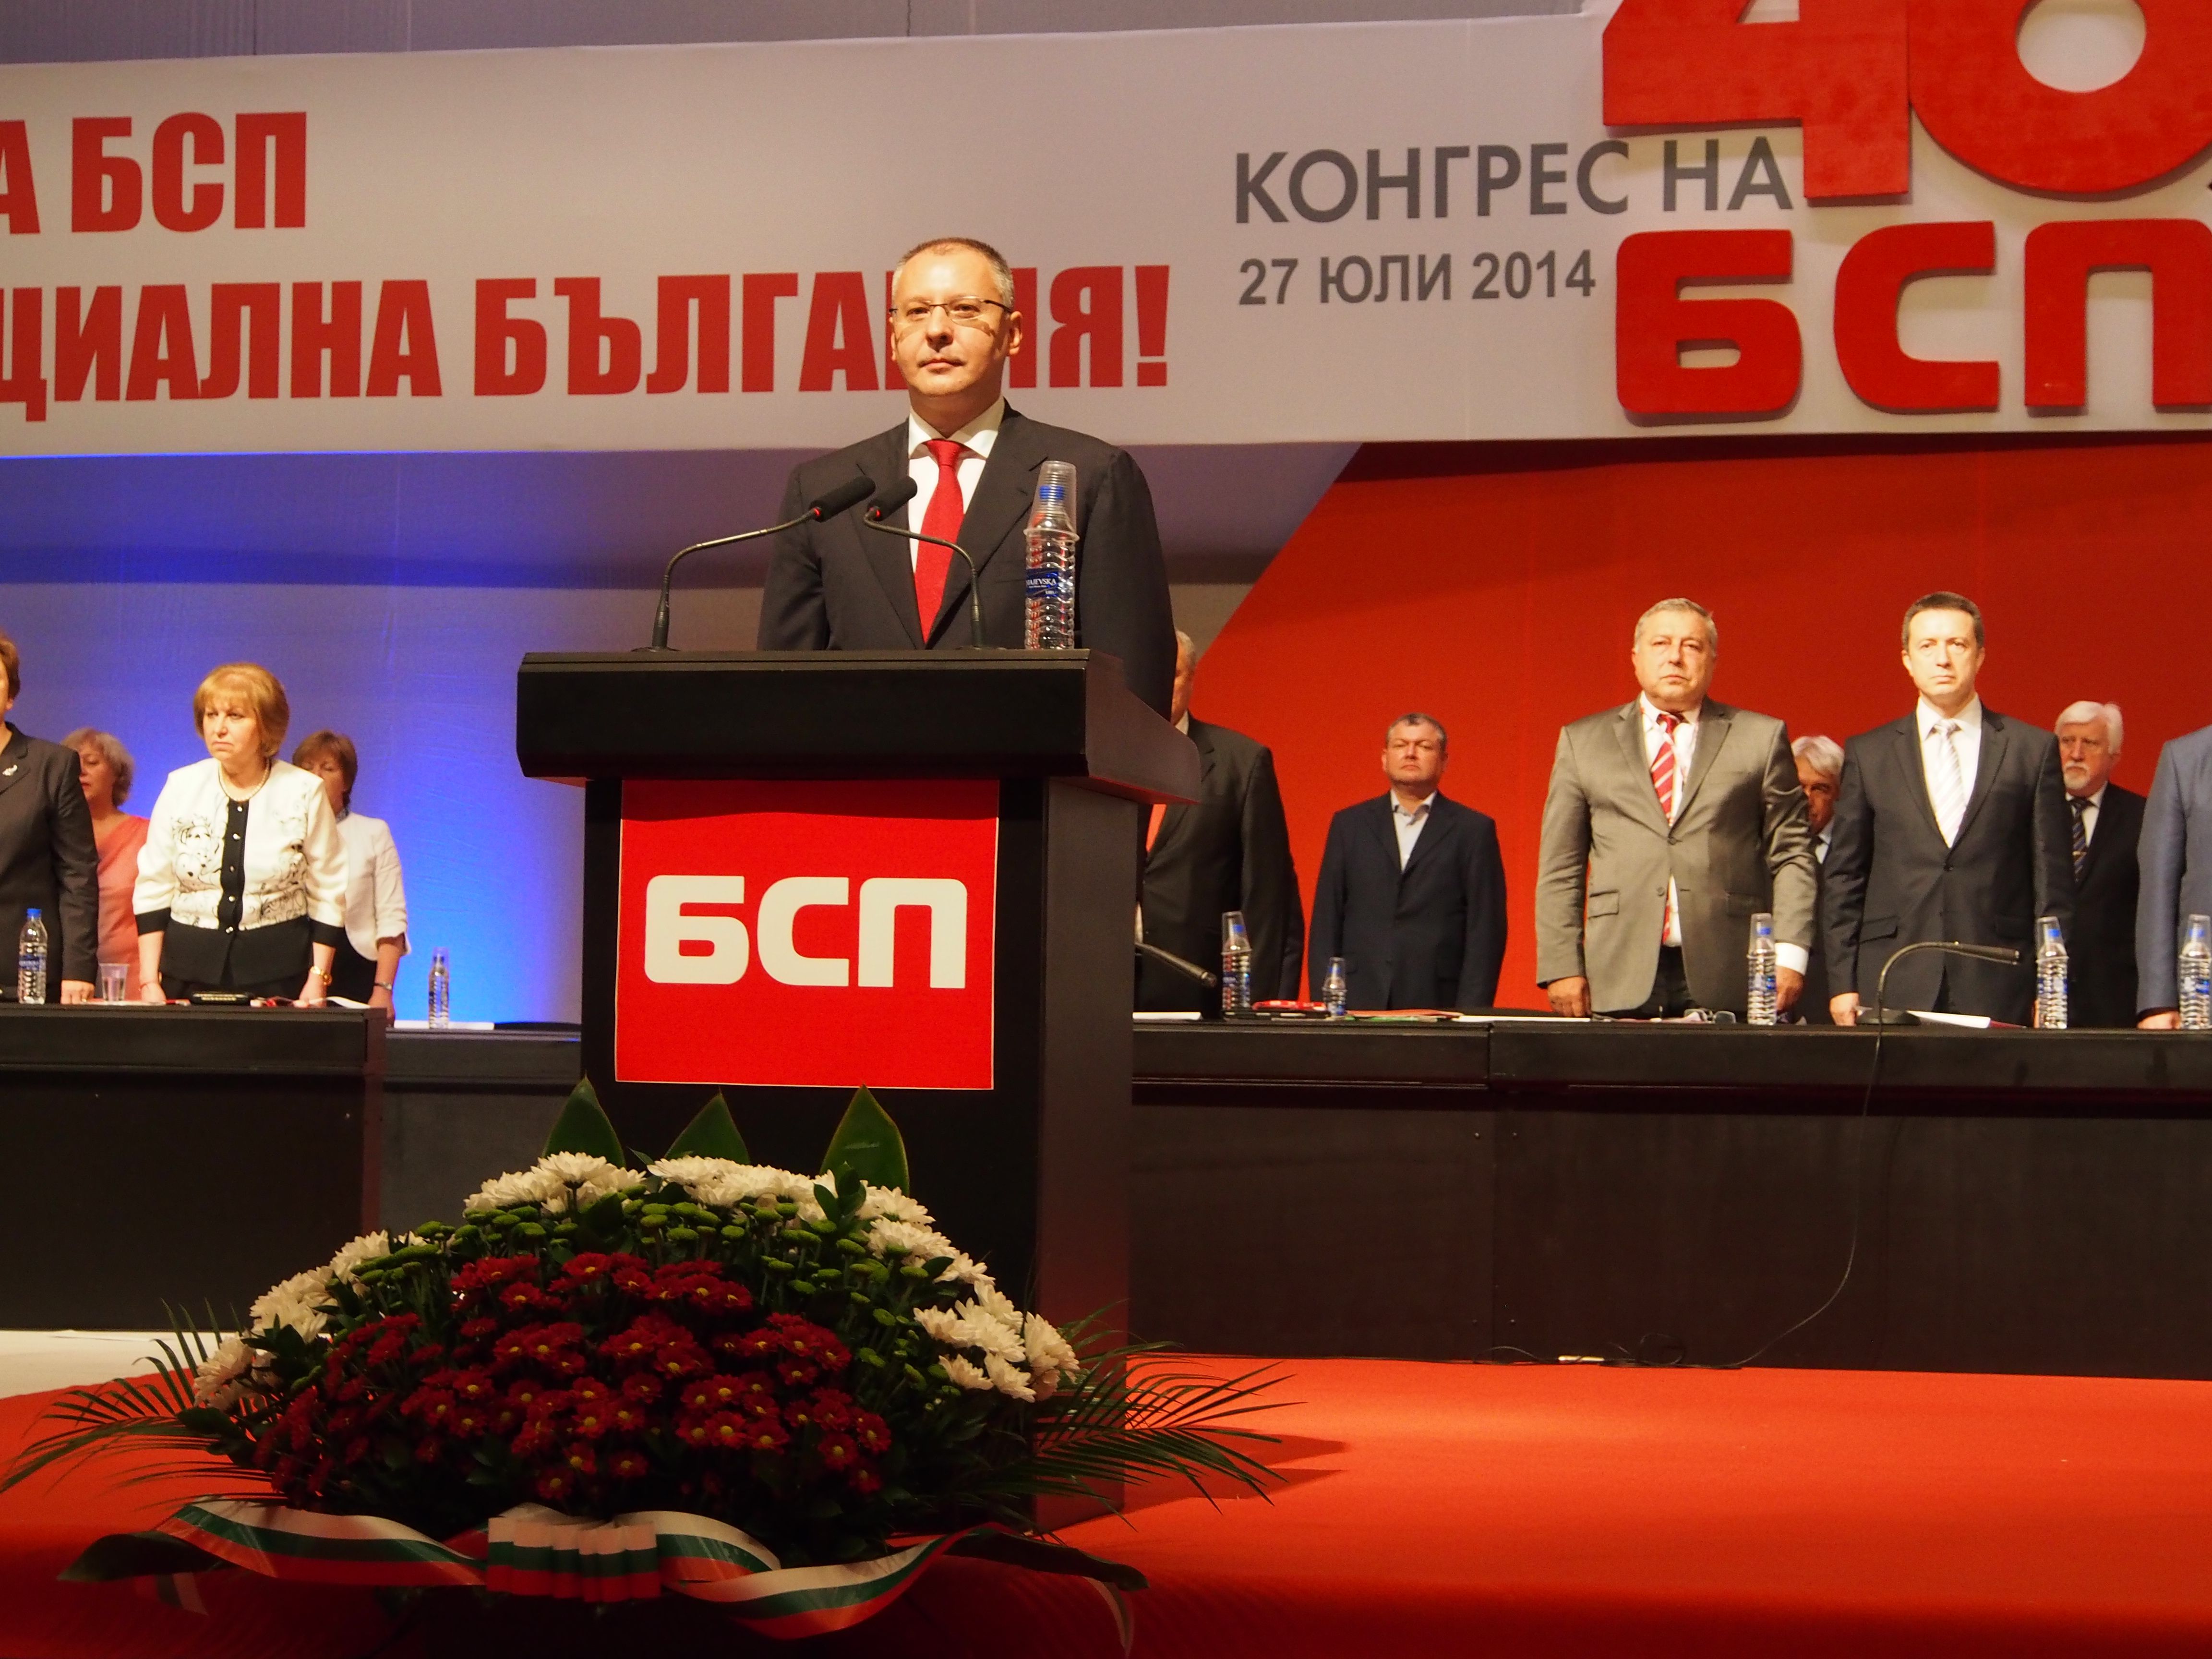 Ето я емоционалната реч на Сергей Станишев пред делегатите